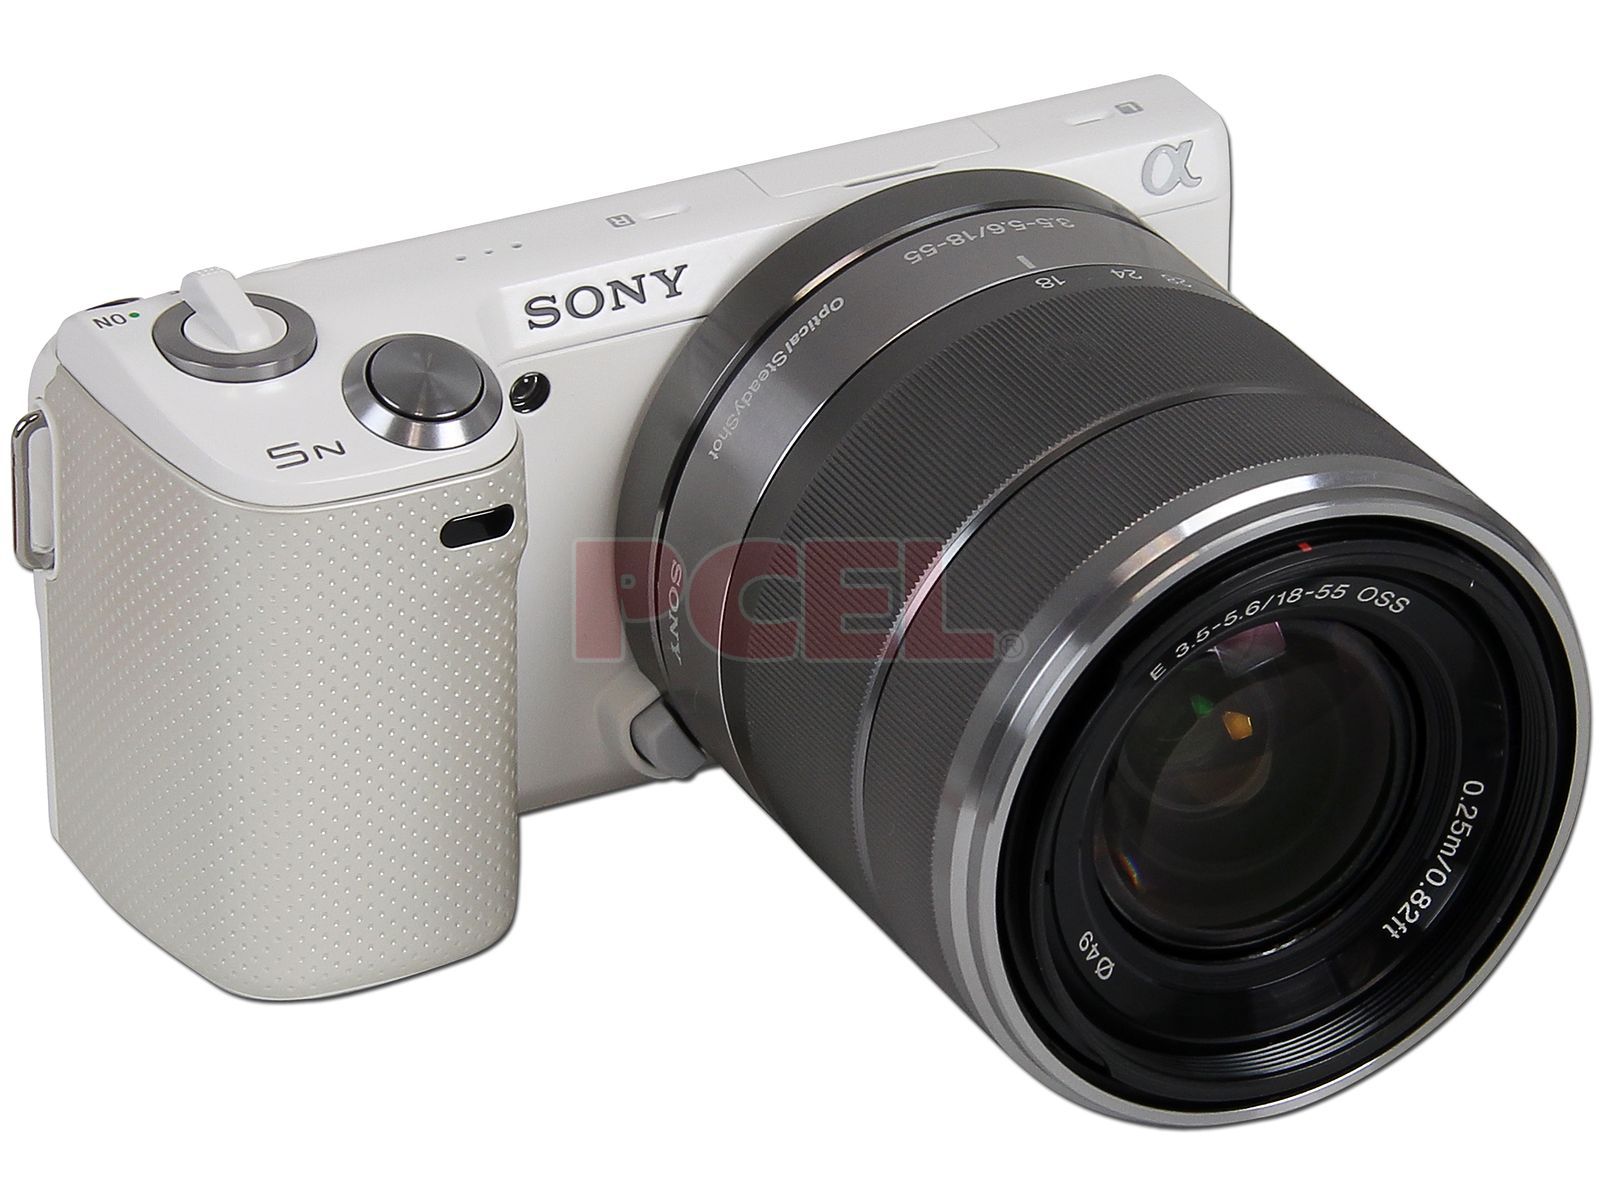 Cartero Negociar Frotar Cámara Fotográfica Digital Sony Nex-5n, 16.1MP, Lente 18-55 mm F3,5-5,6  pantalla touch. Video Full HD, 3D Sweep Panorama. Color Blanca.